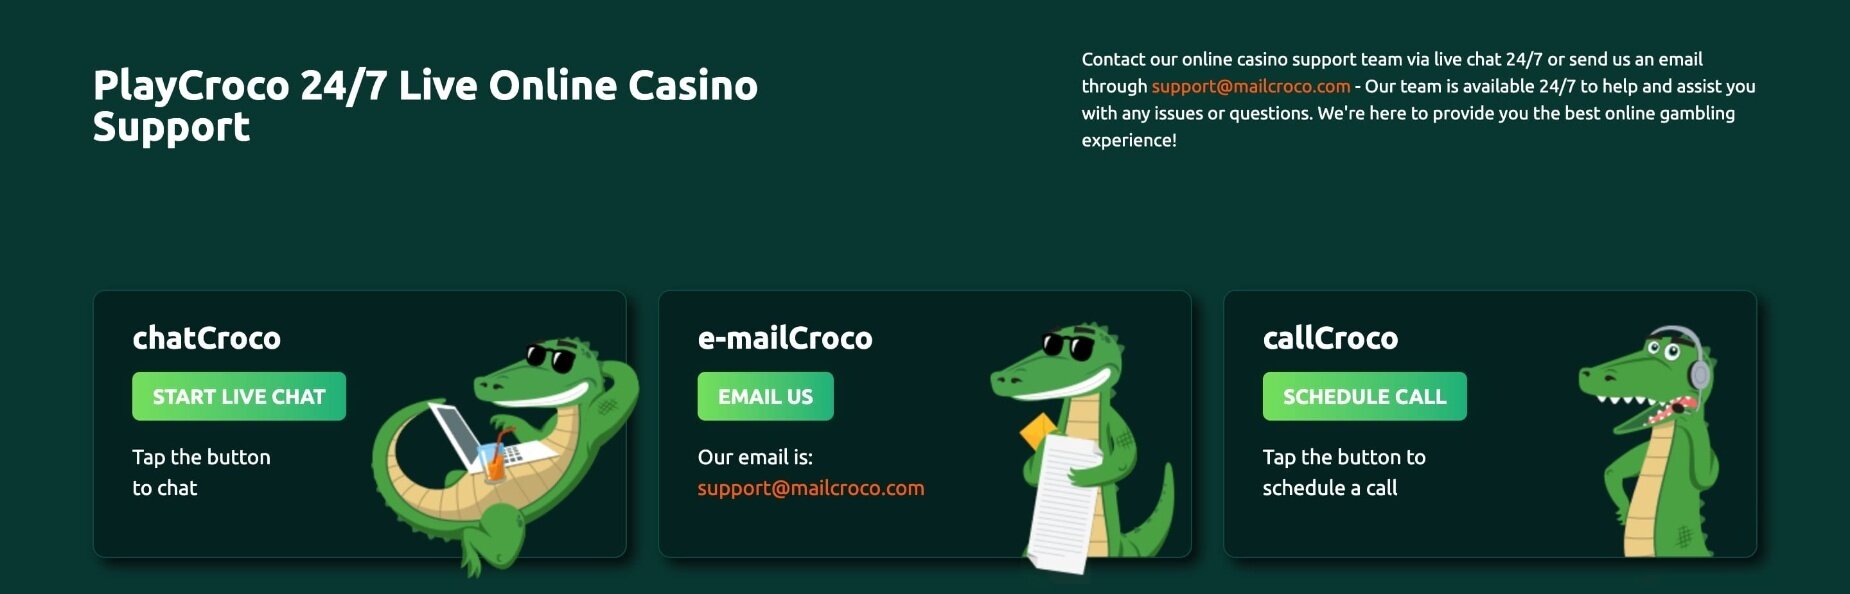 playcroco online casino customer support